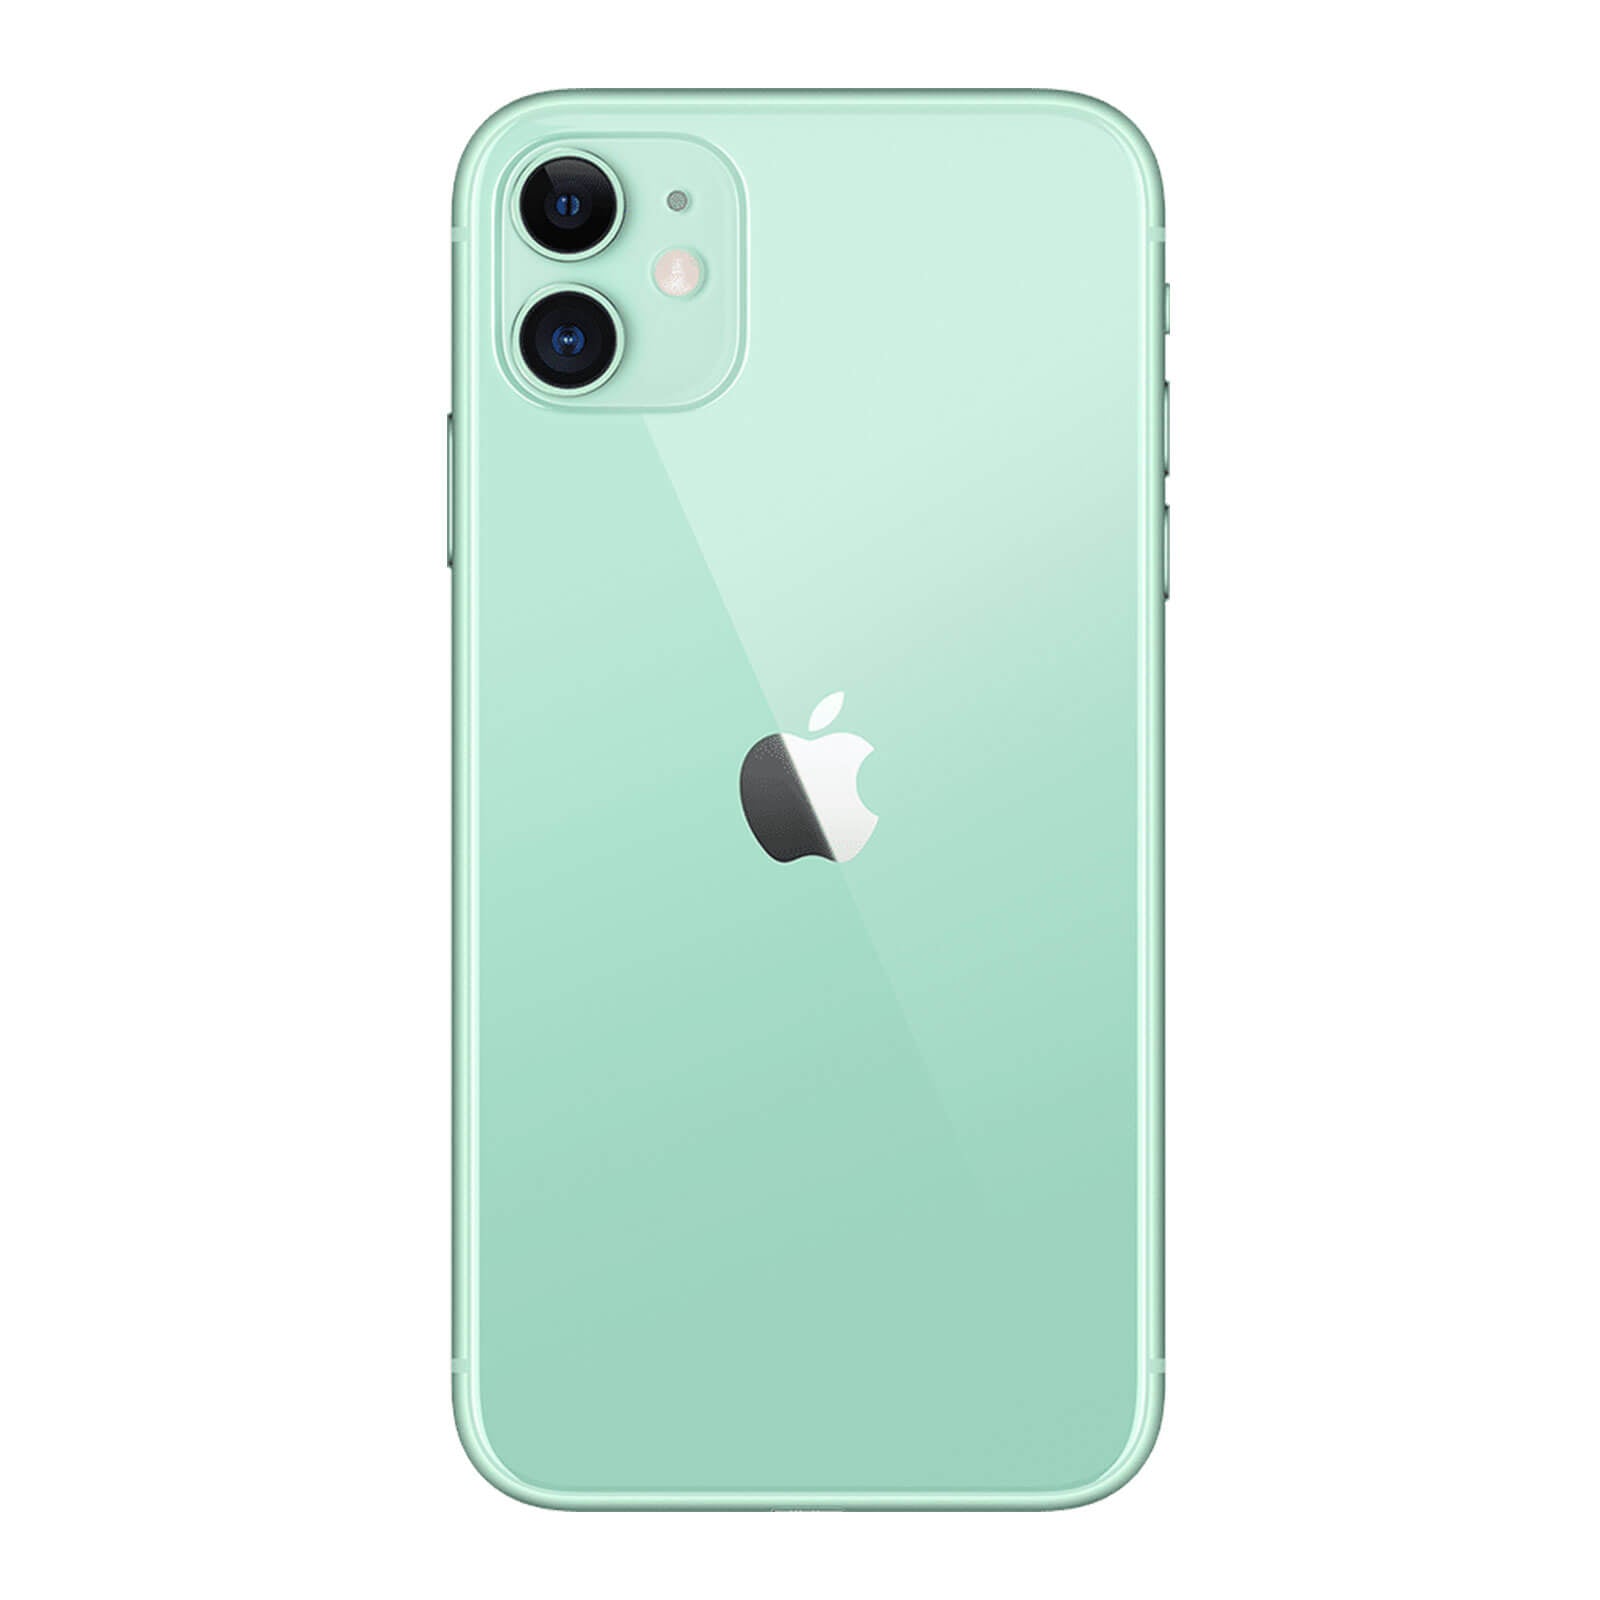 Apple iPhone 11 256GB Green Fair - Verizon